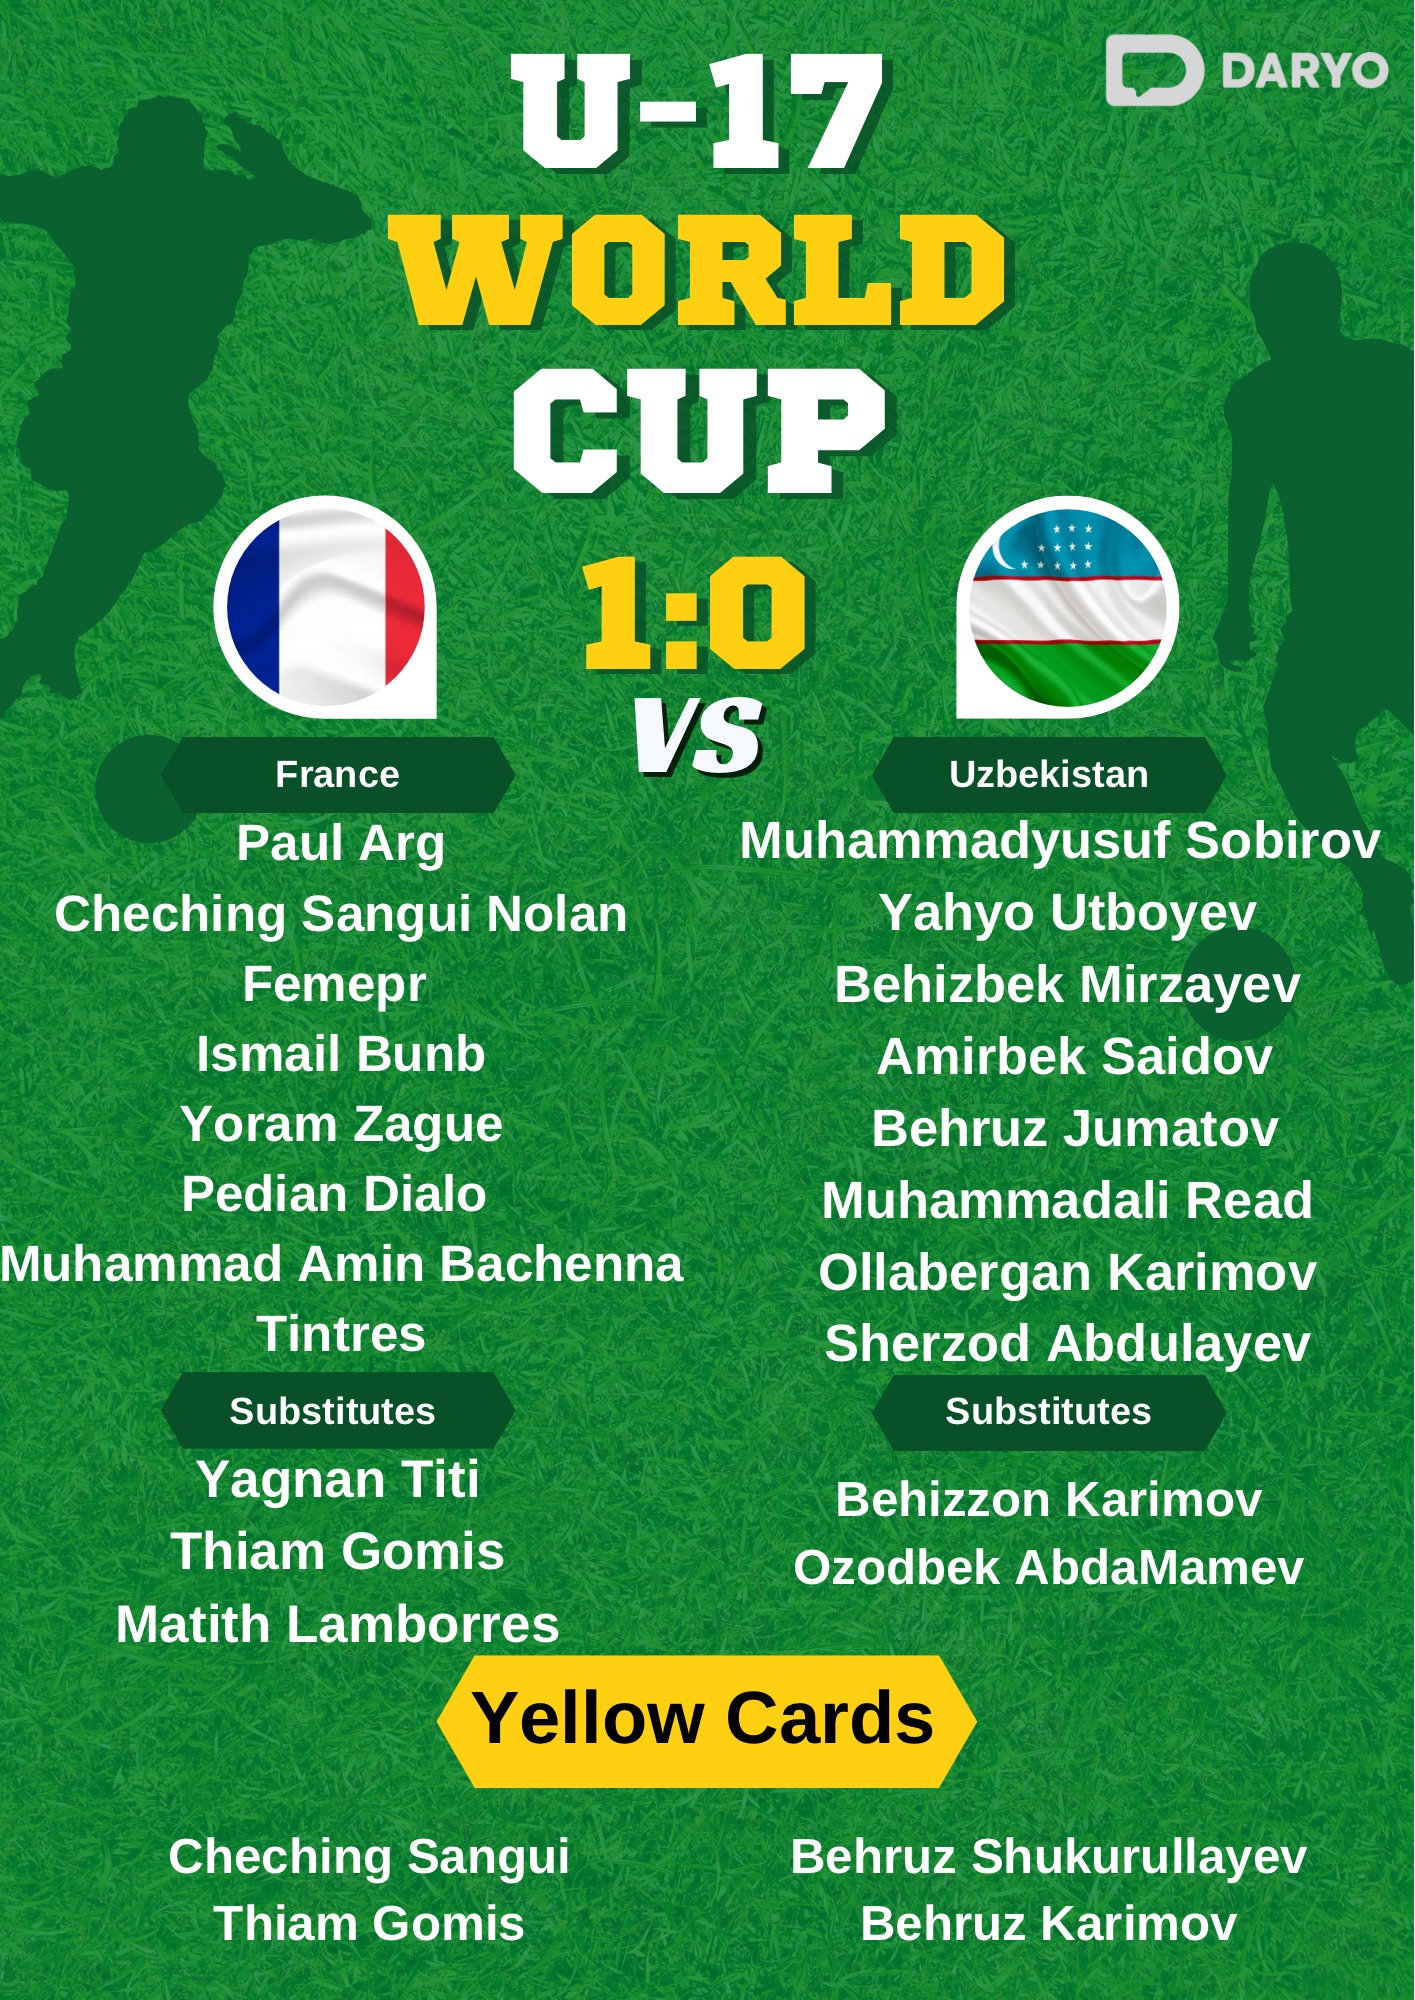 Uzbekistan's valiant effort falls short as France secures semifinal spot at U-17 World Cup 